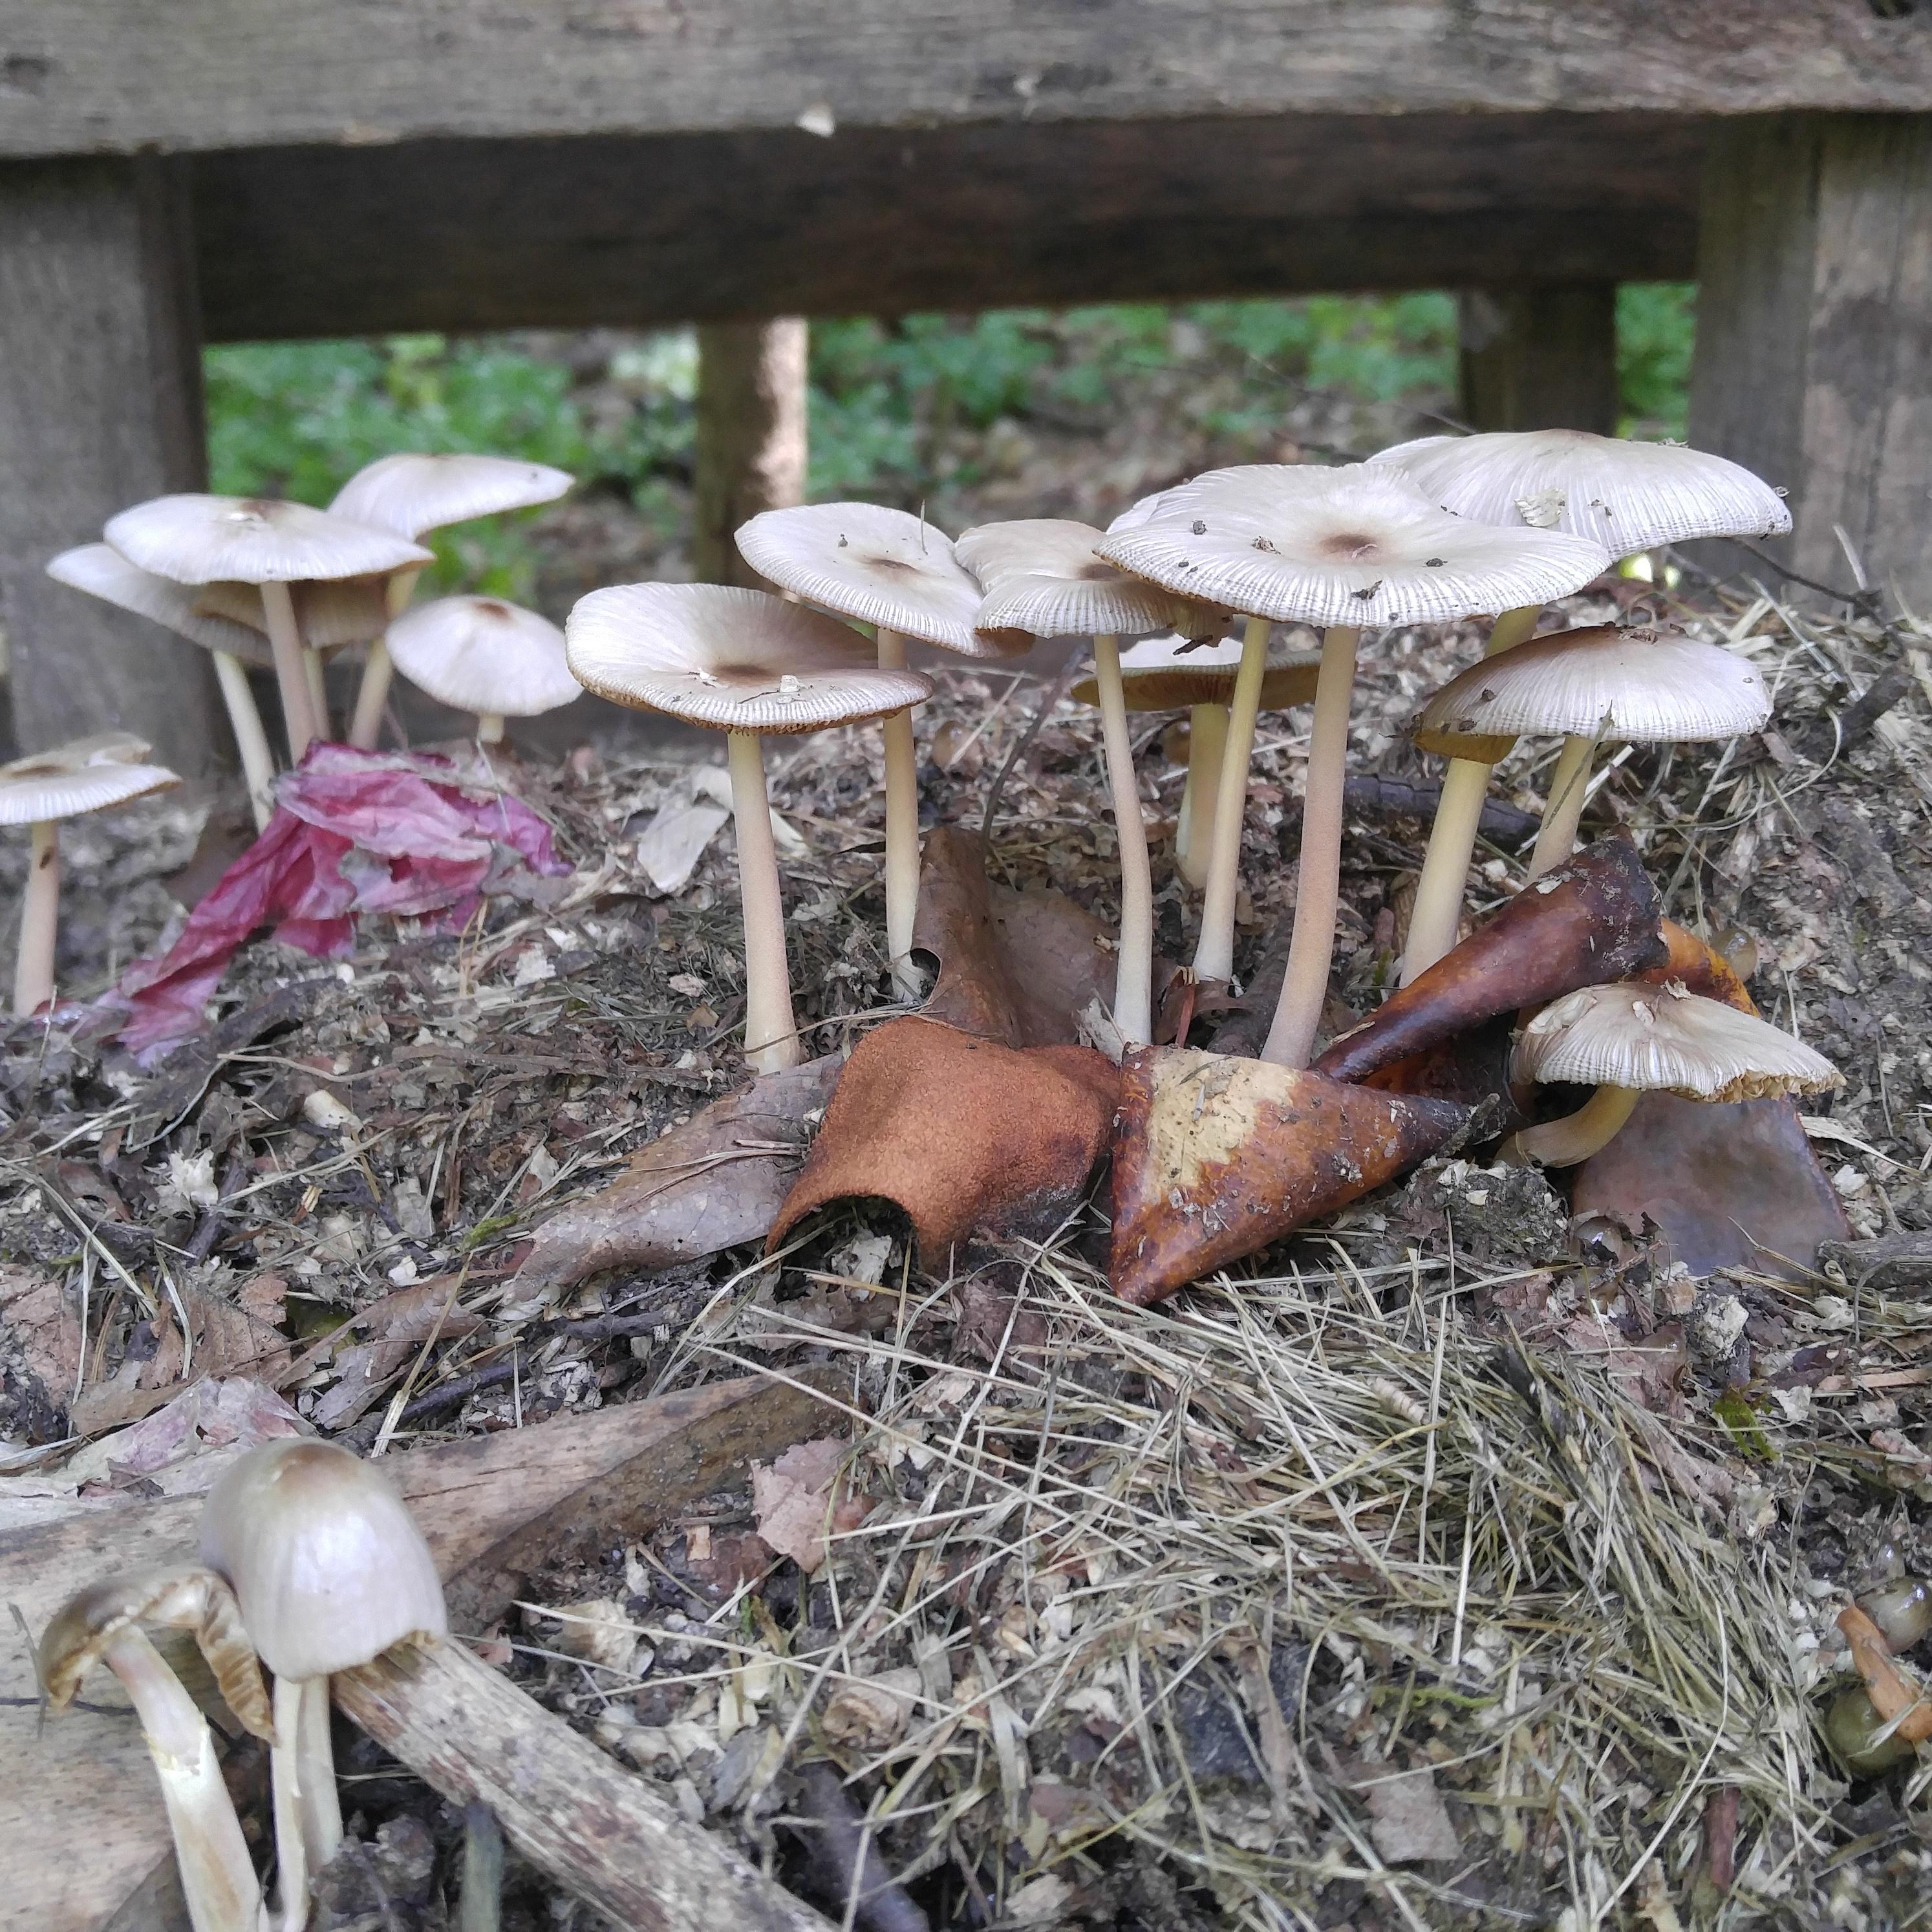 Compost mushrooms